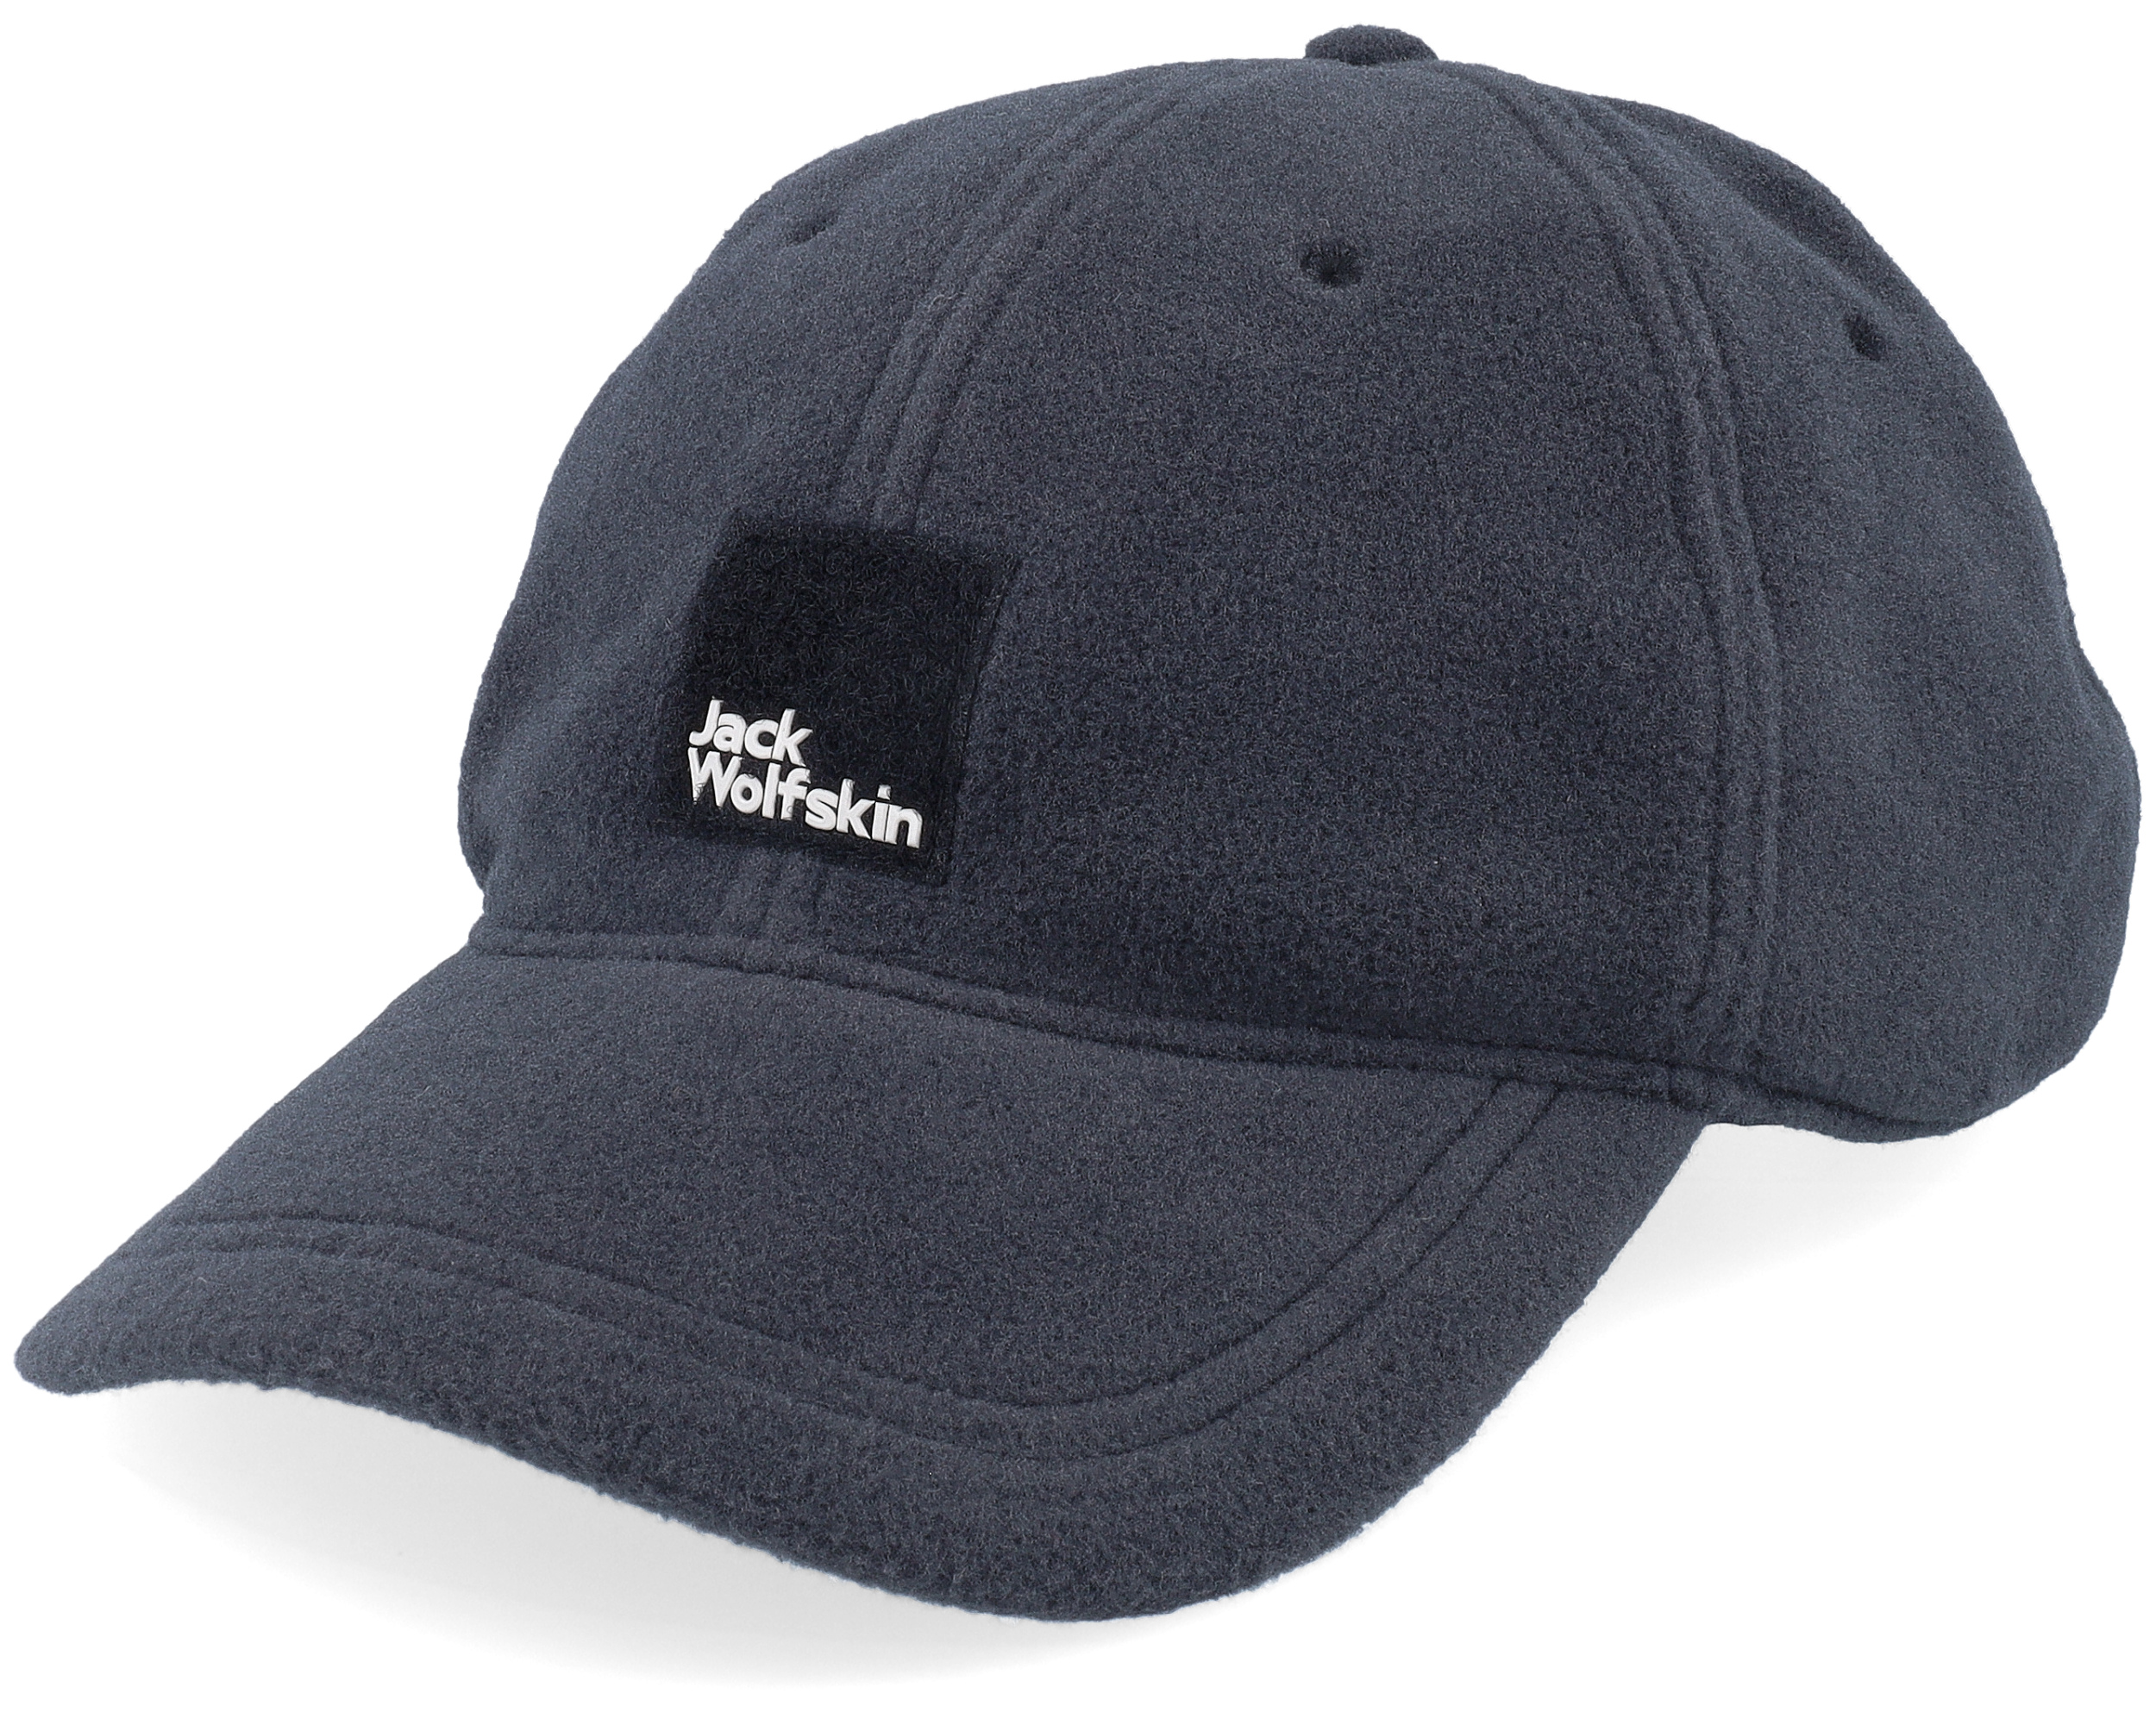 Black Wolfskin Jack cap - Bockenheim Cap Dad Granite Cap